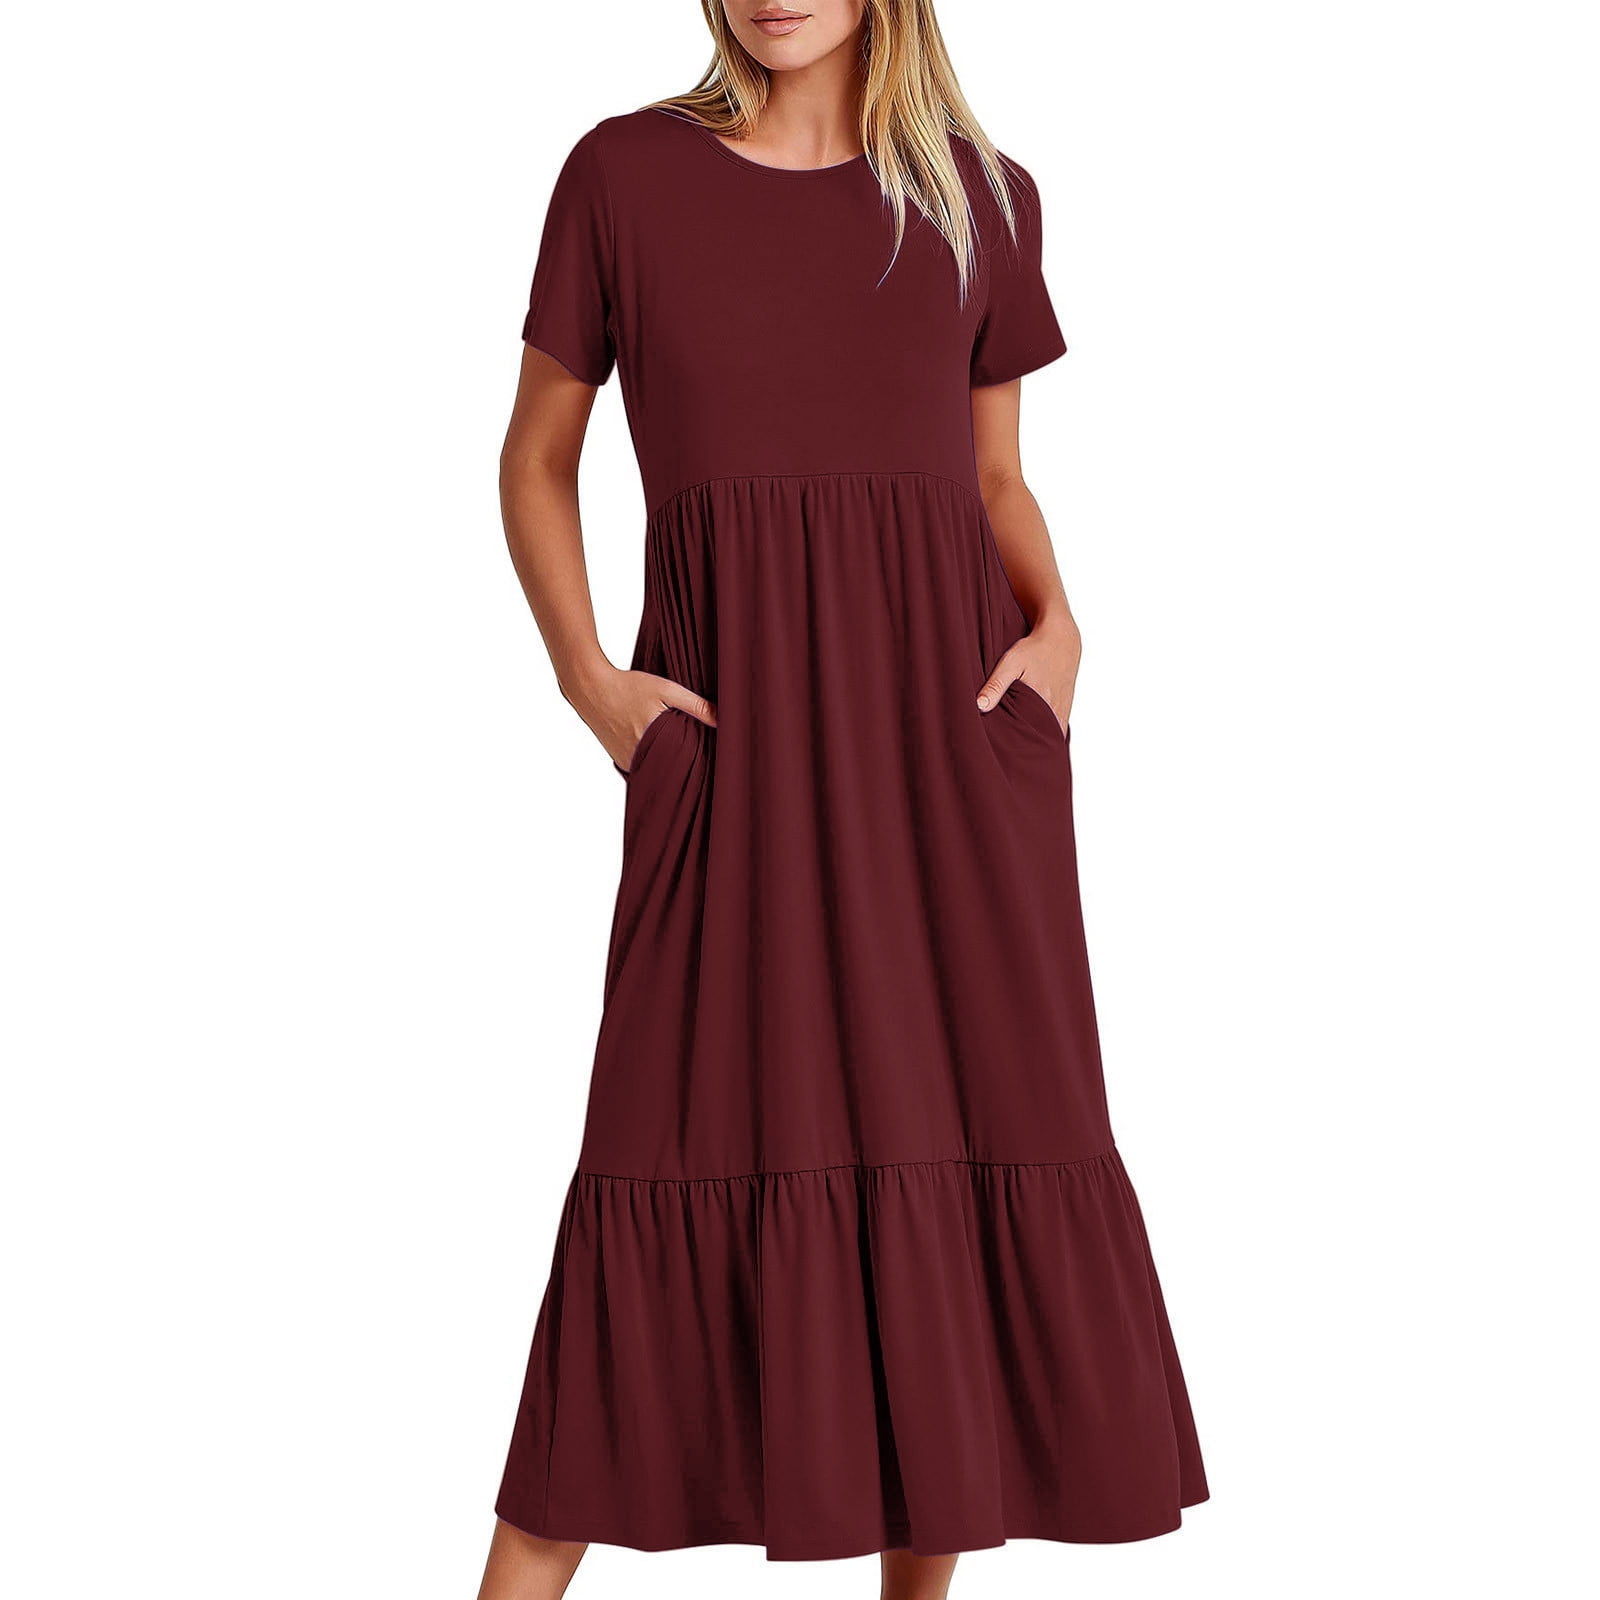 Busydd Women's Long Dress Short Sleeve Round-Neck Skirt Fashionable ...